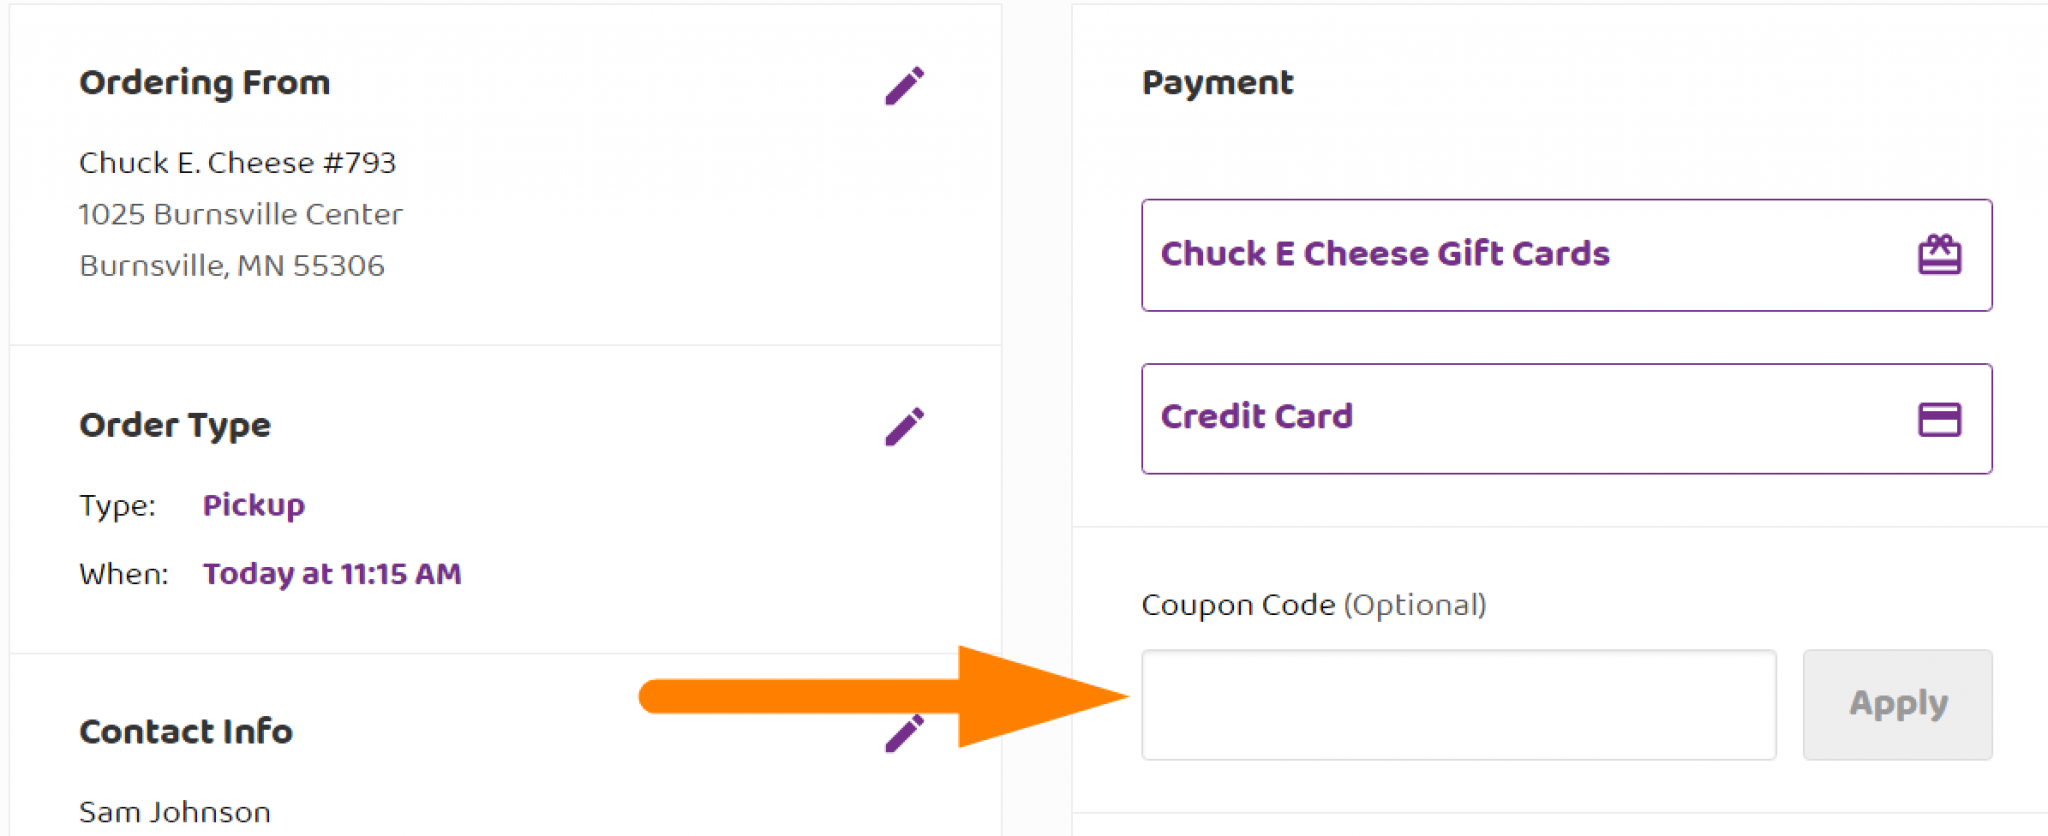 Chuck E. Cheese Coupons, Deals & Discount Codes 2023